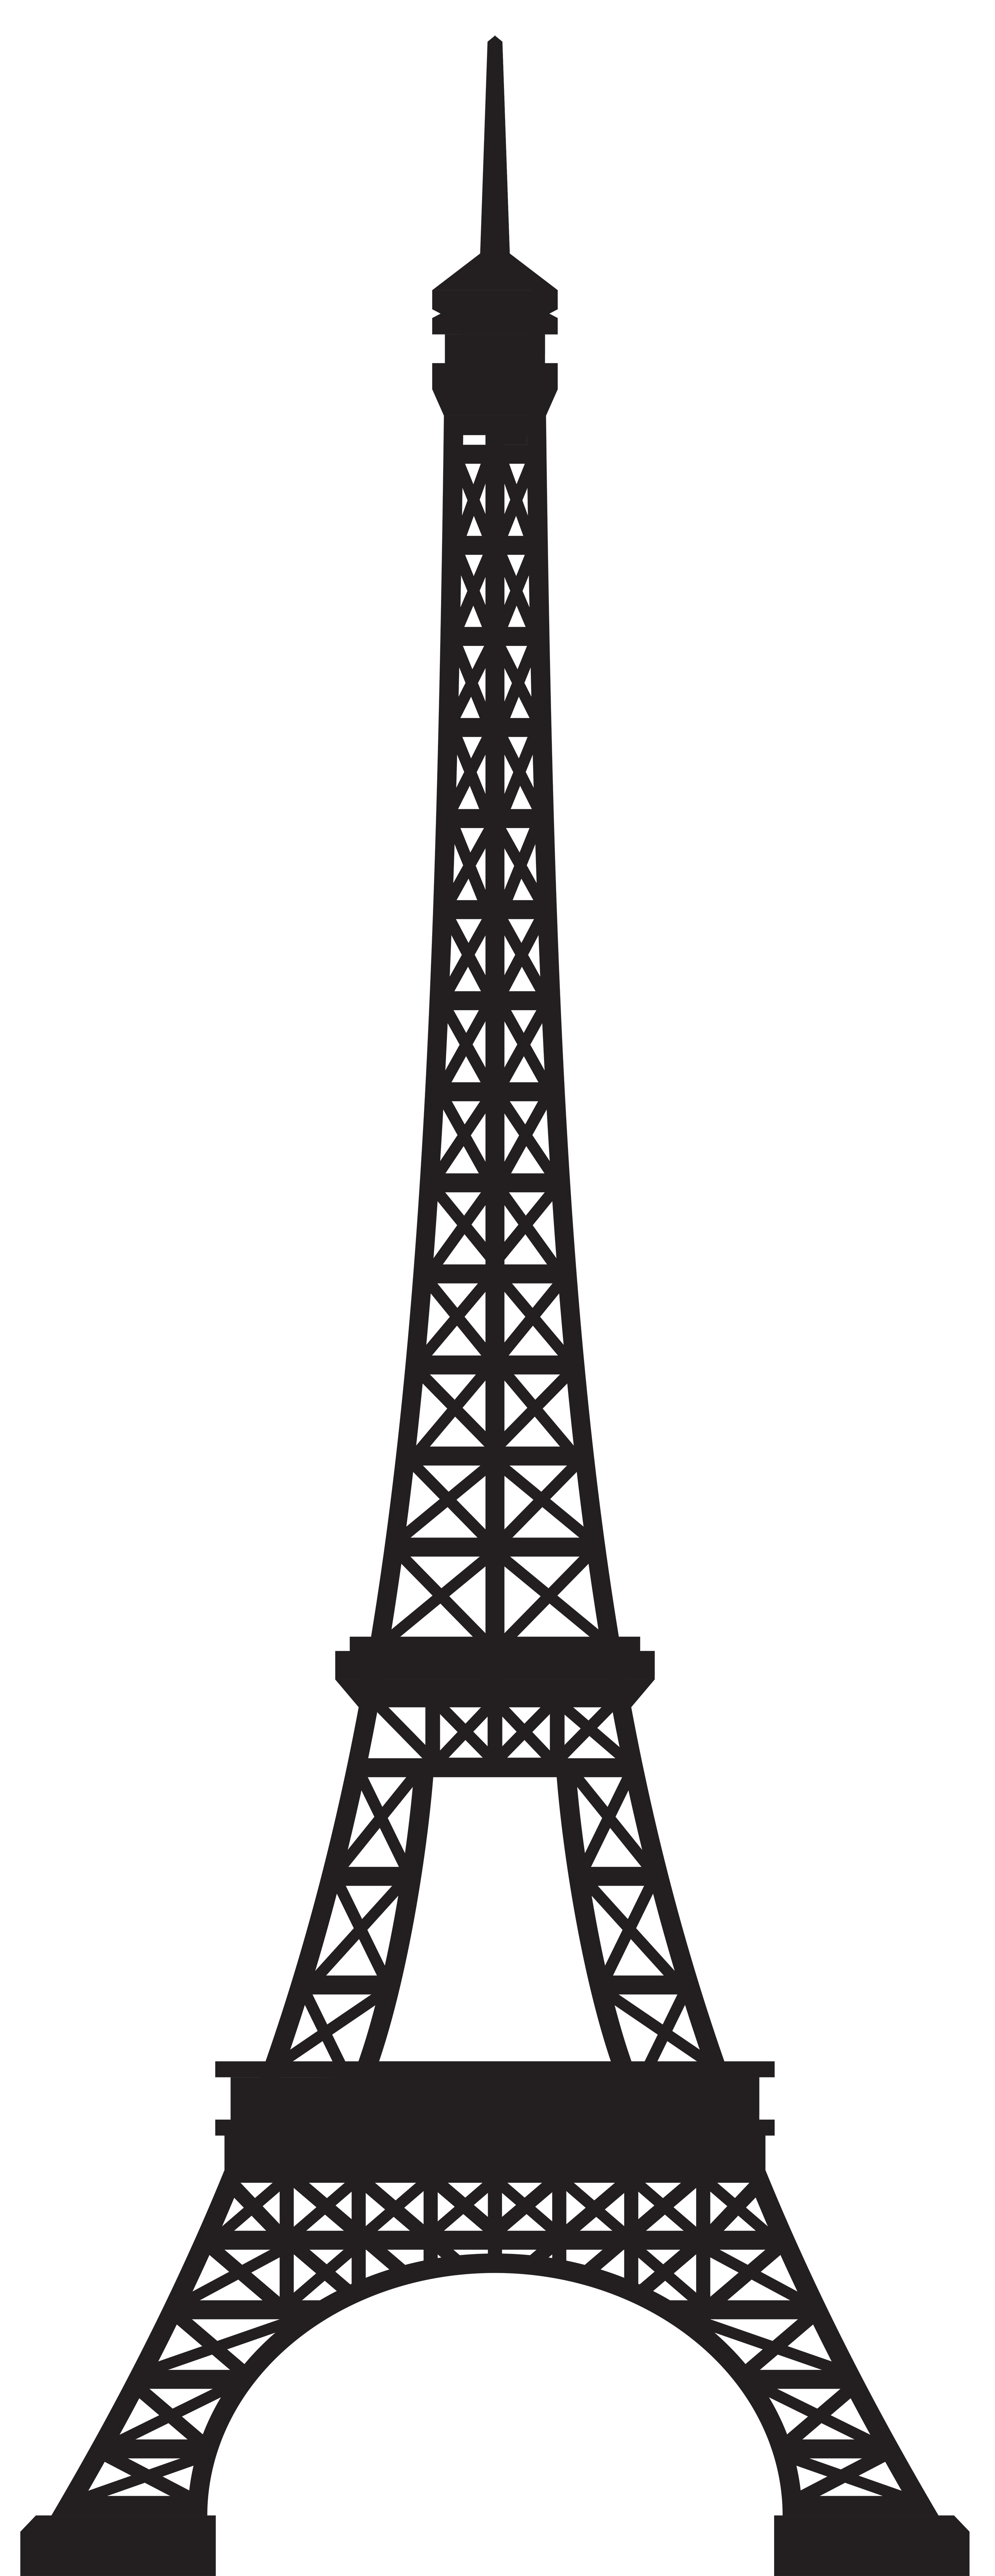 Landmark Tower Eiffel Silhouette Free Frame Clipart